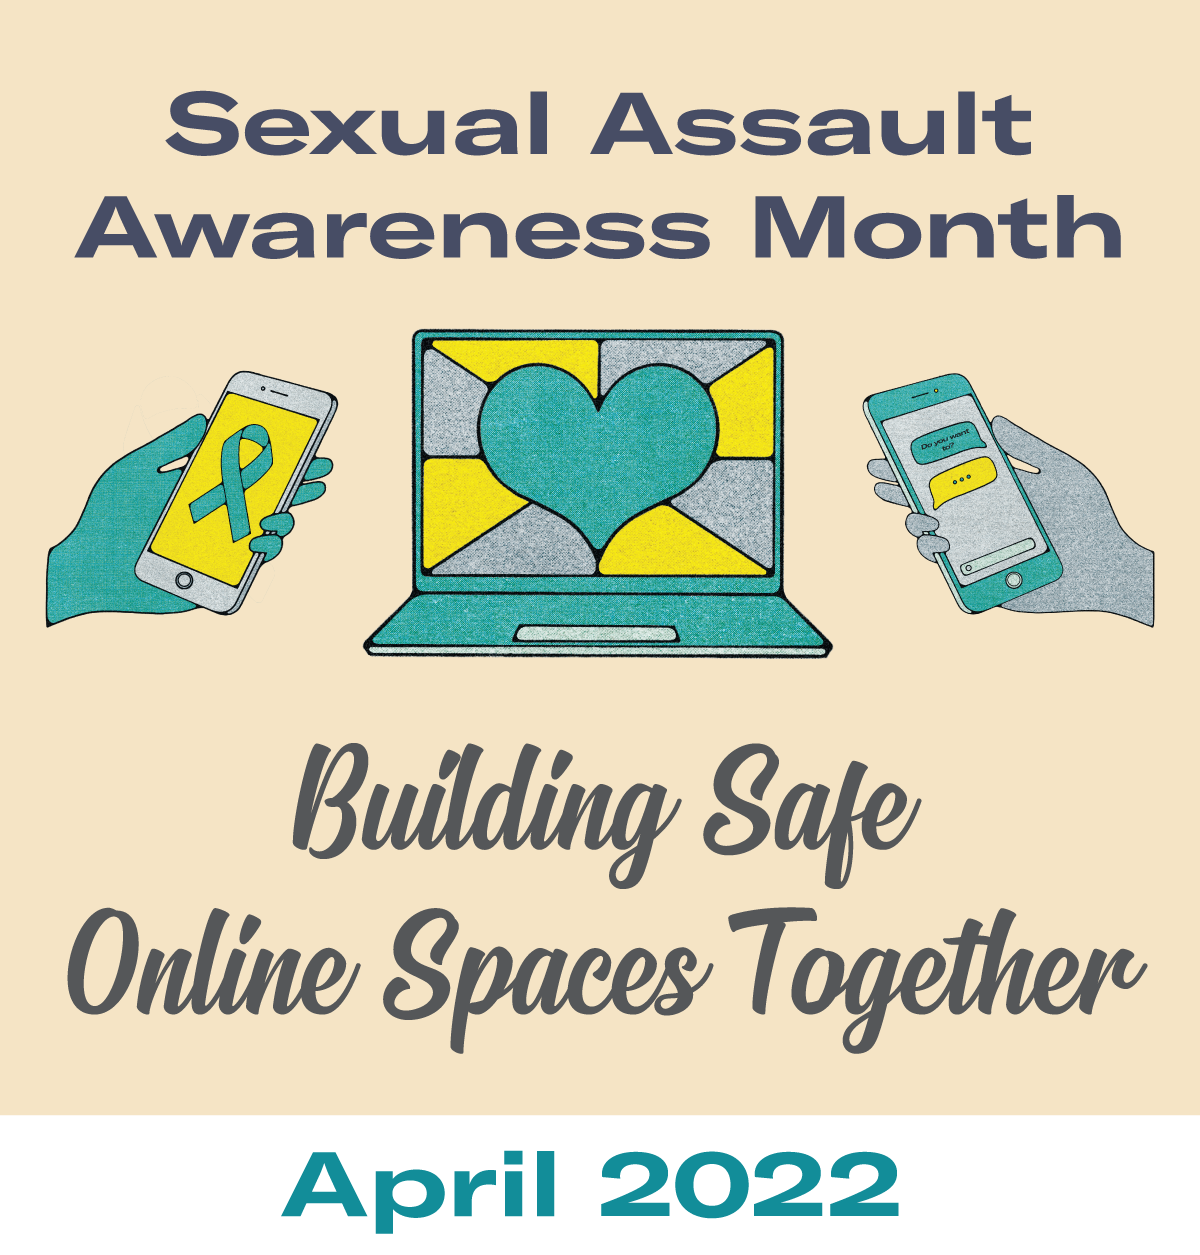 Sexual Assault Awareness Month, Building Safe Online Spaces Together, April 2022